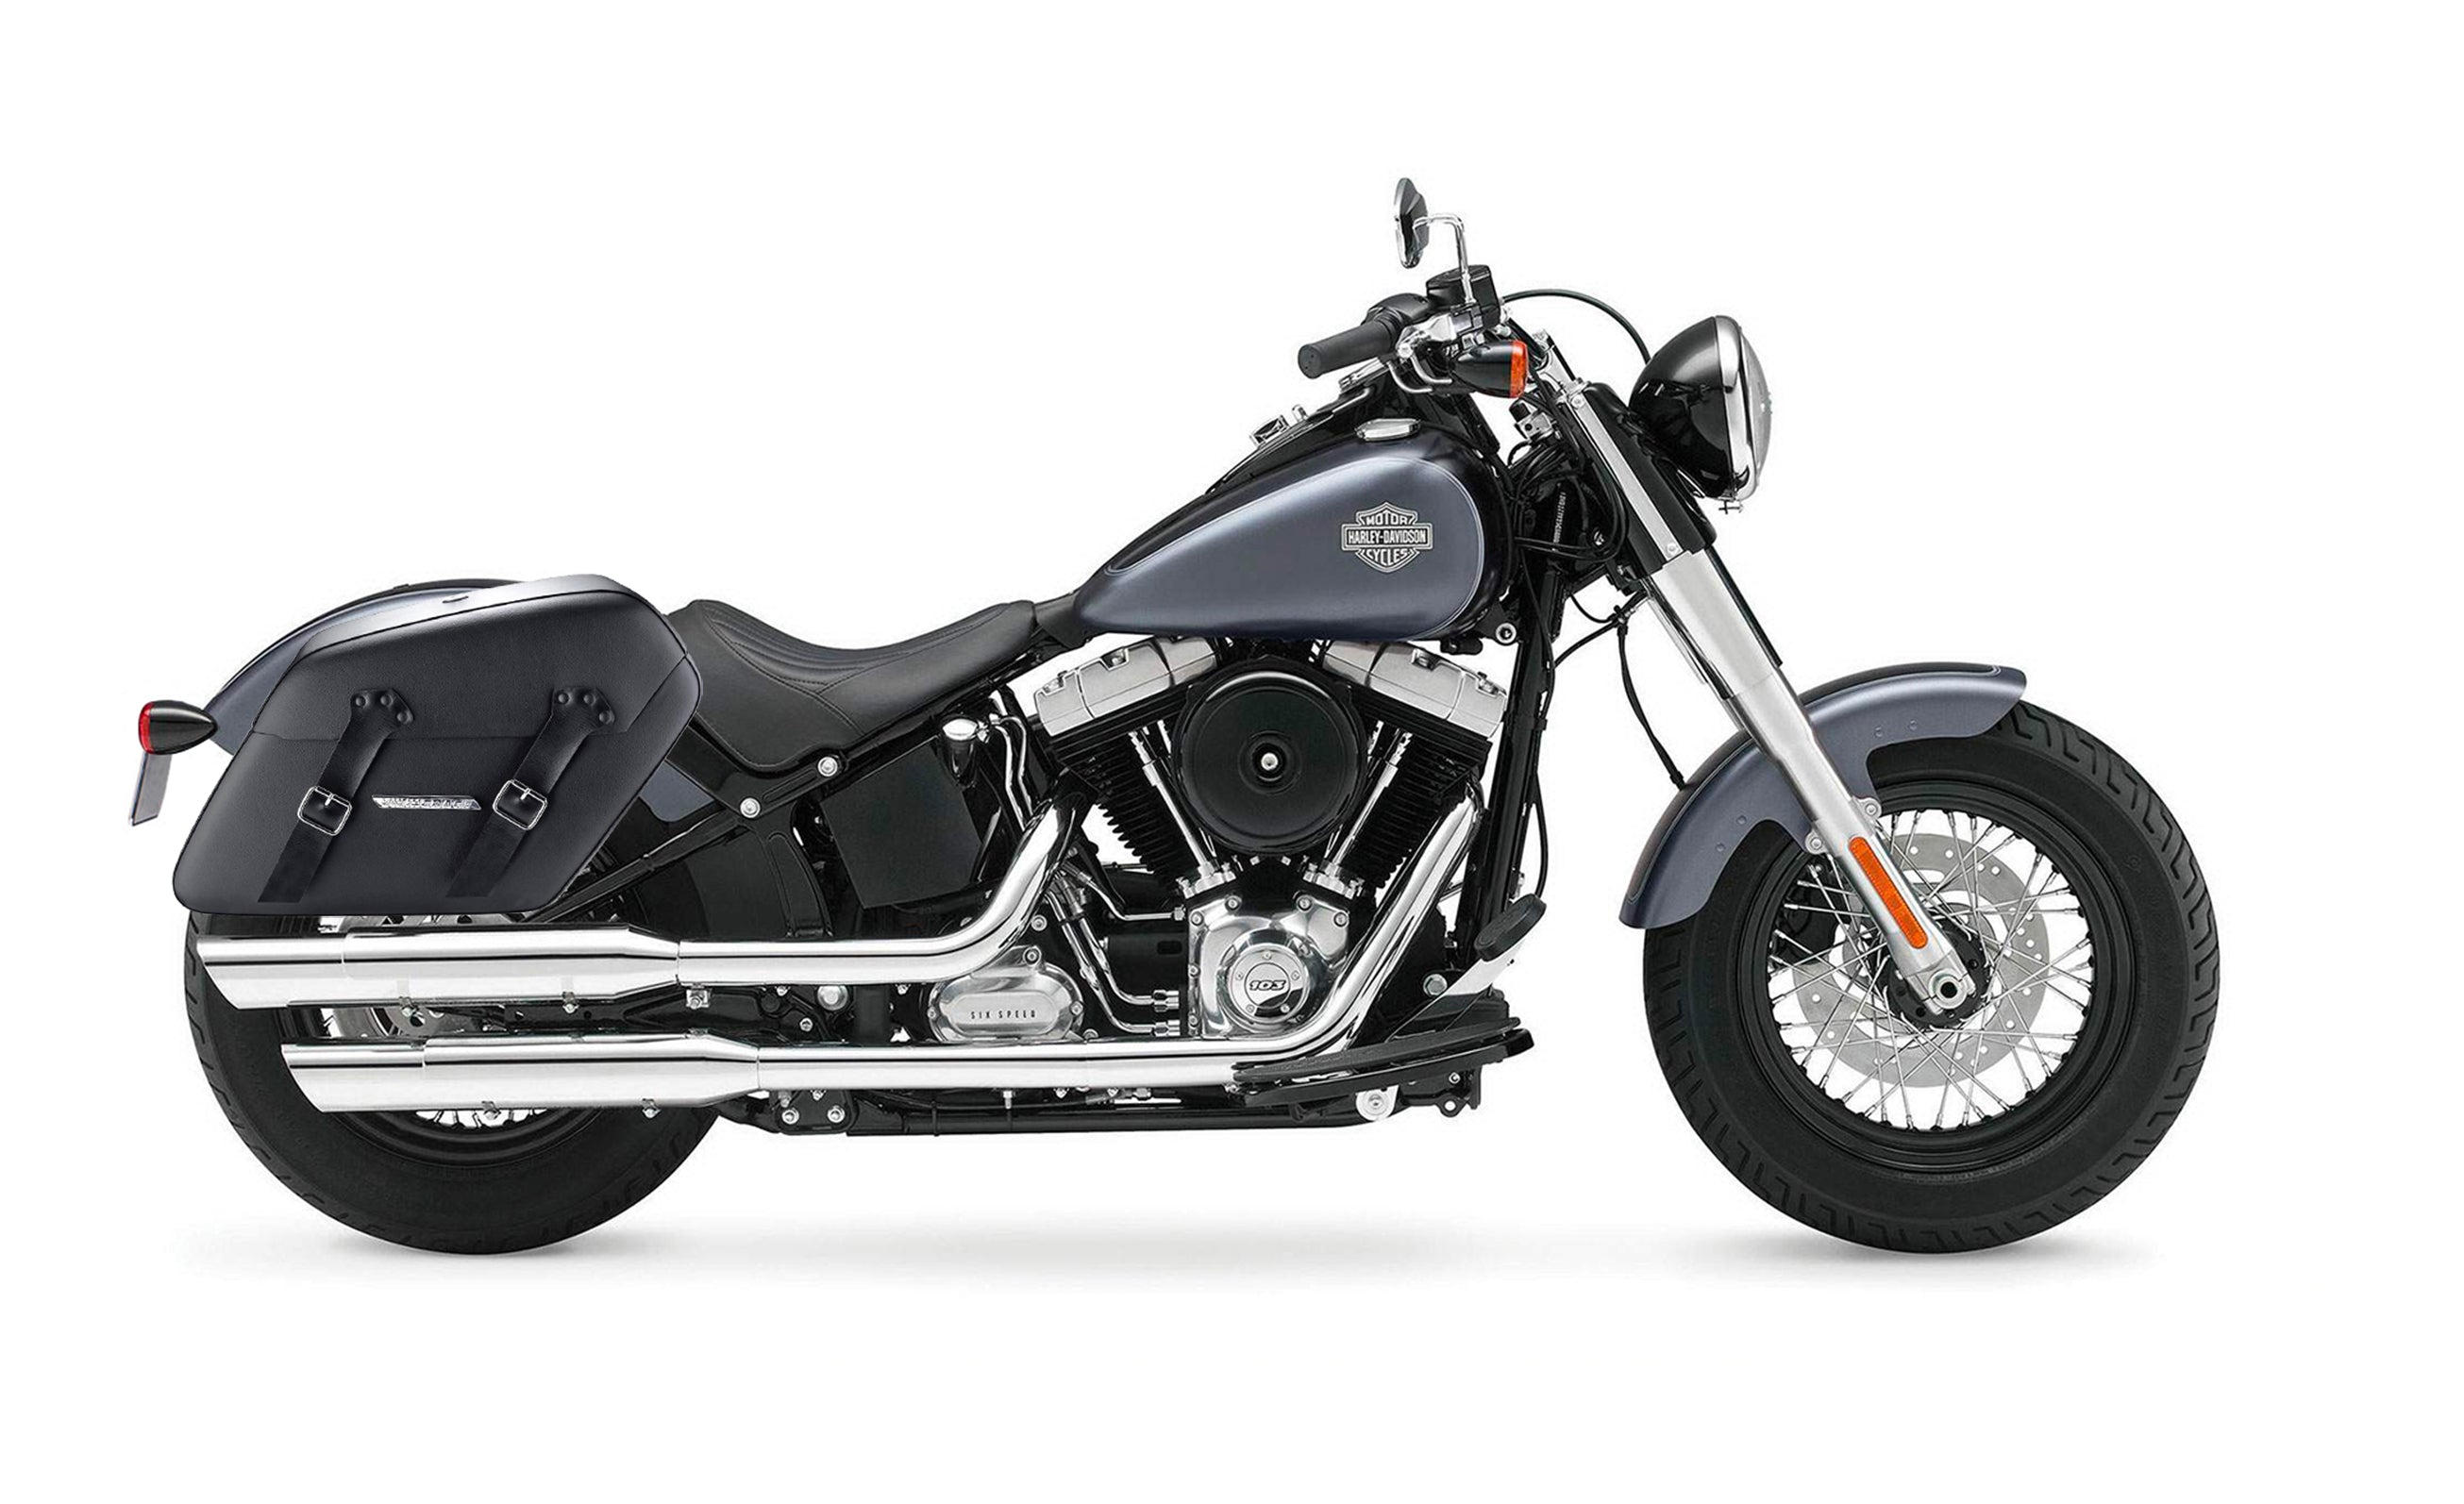 42L - Baldur XL Leather Wrapped Hard Saddlebags for Harley Softail Slim FLS on Bike Photo @expand